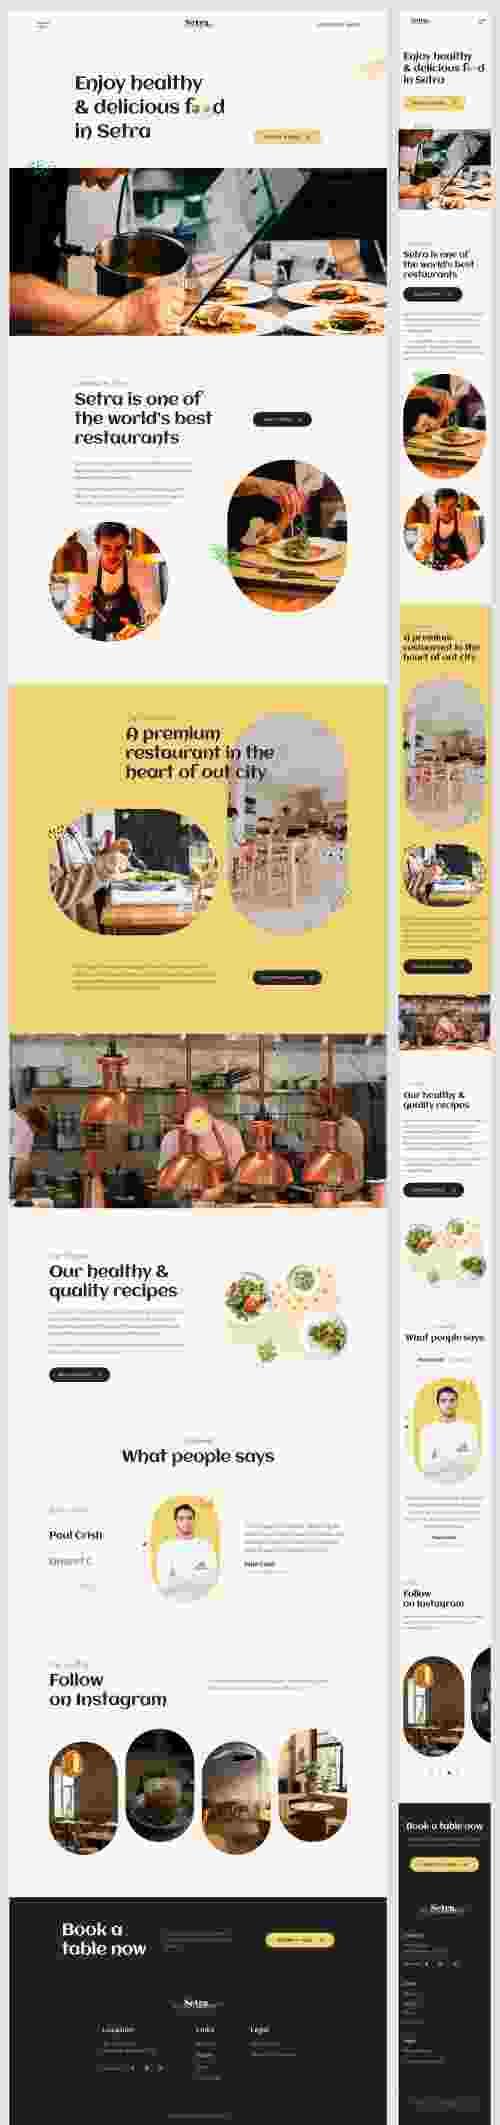 UIHut - Setra ~ Restaurant Website Design - 18896